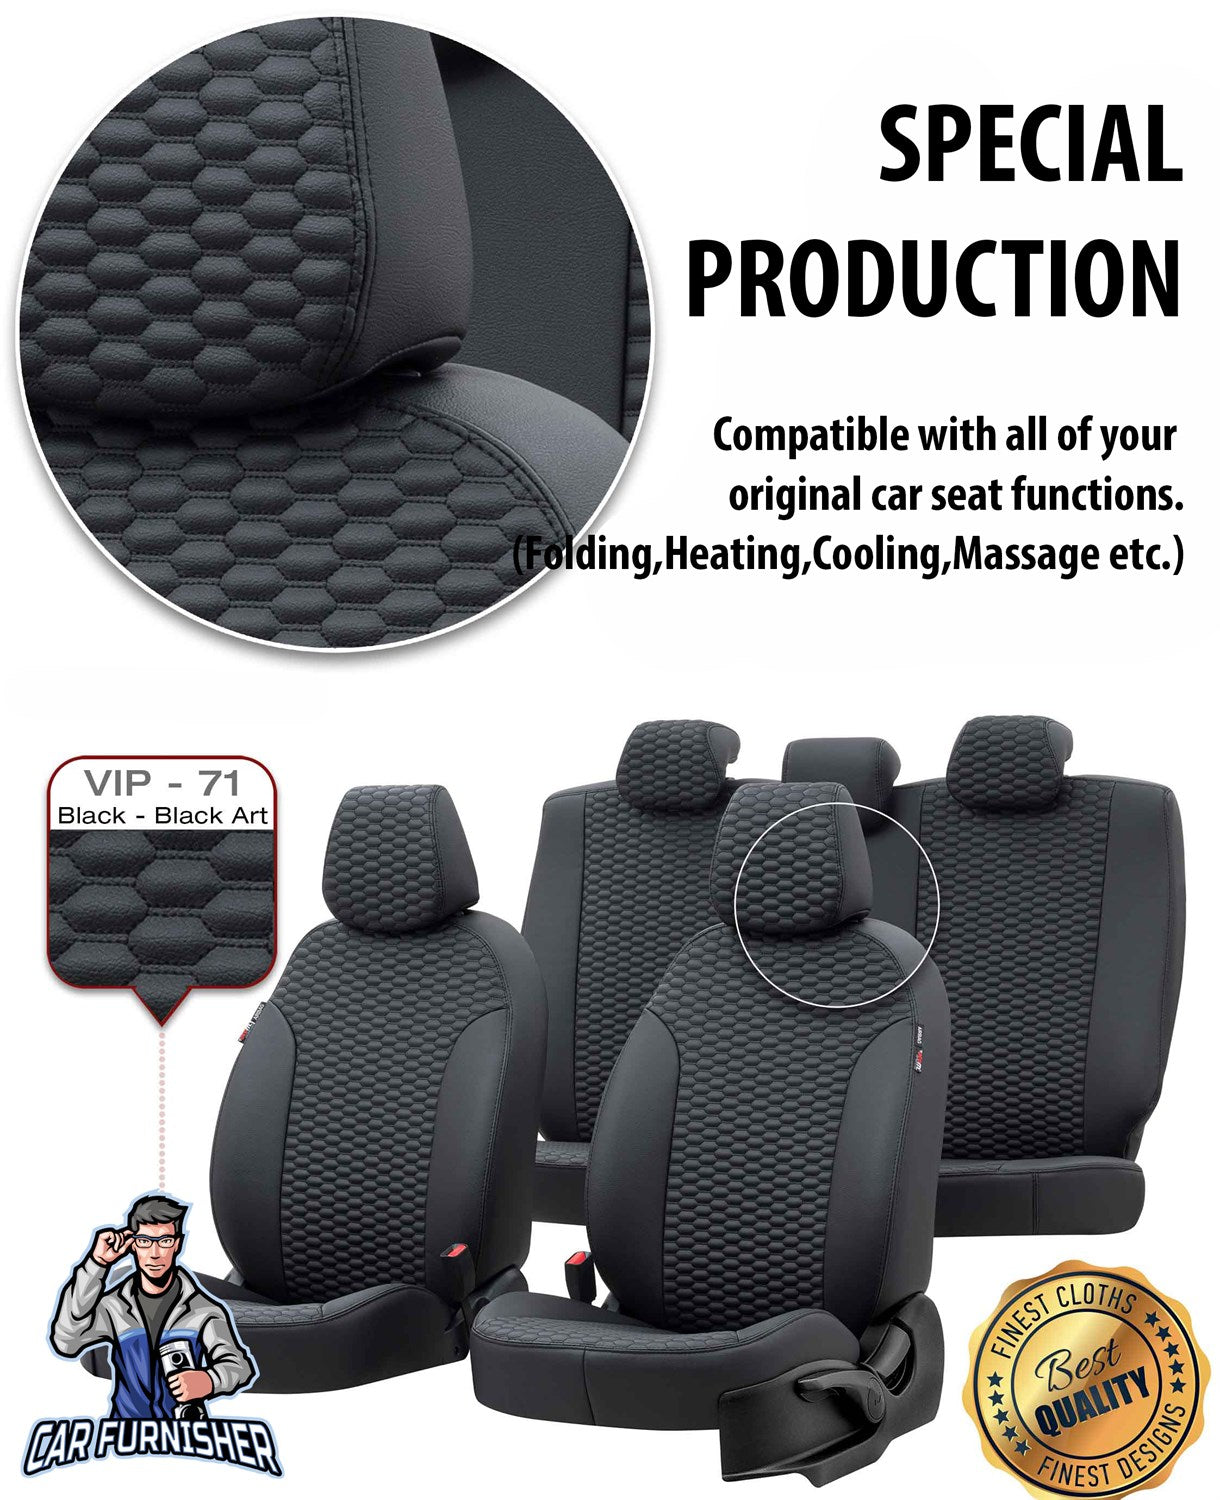 Daihatsu Terios Seat Covers Tokyo Leather Design Smoked Leather